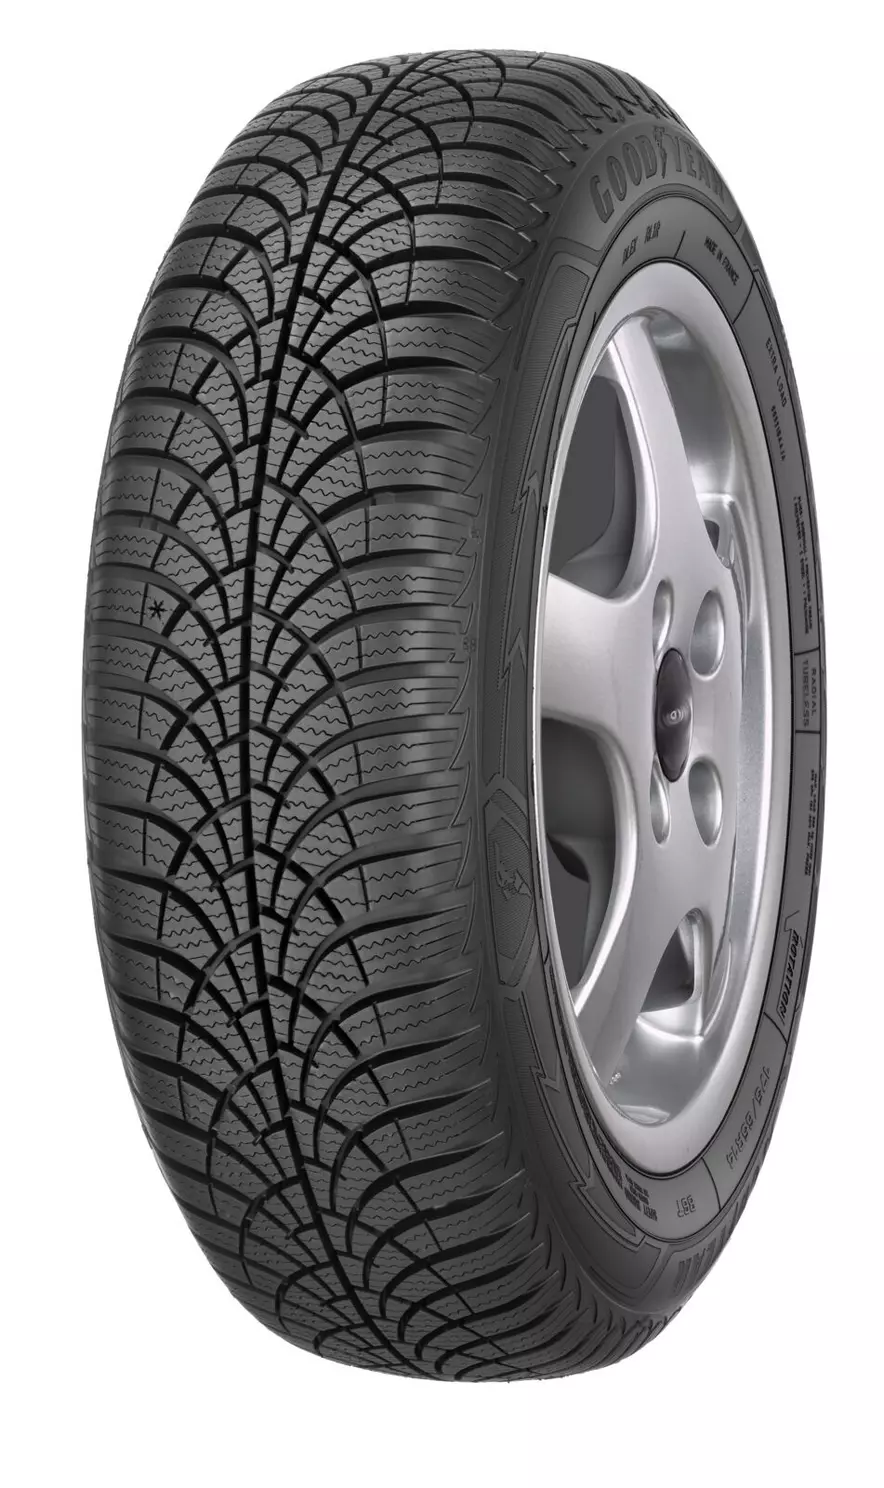 Buy Goodyear UltraGrip Tyres 9 Plus Online